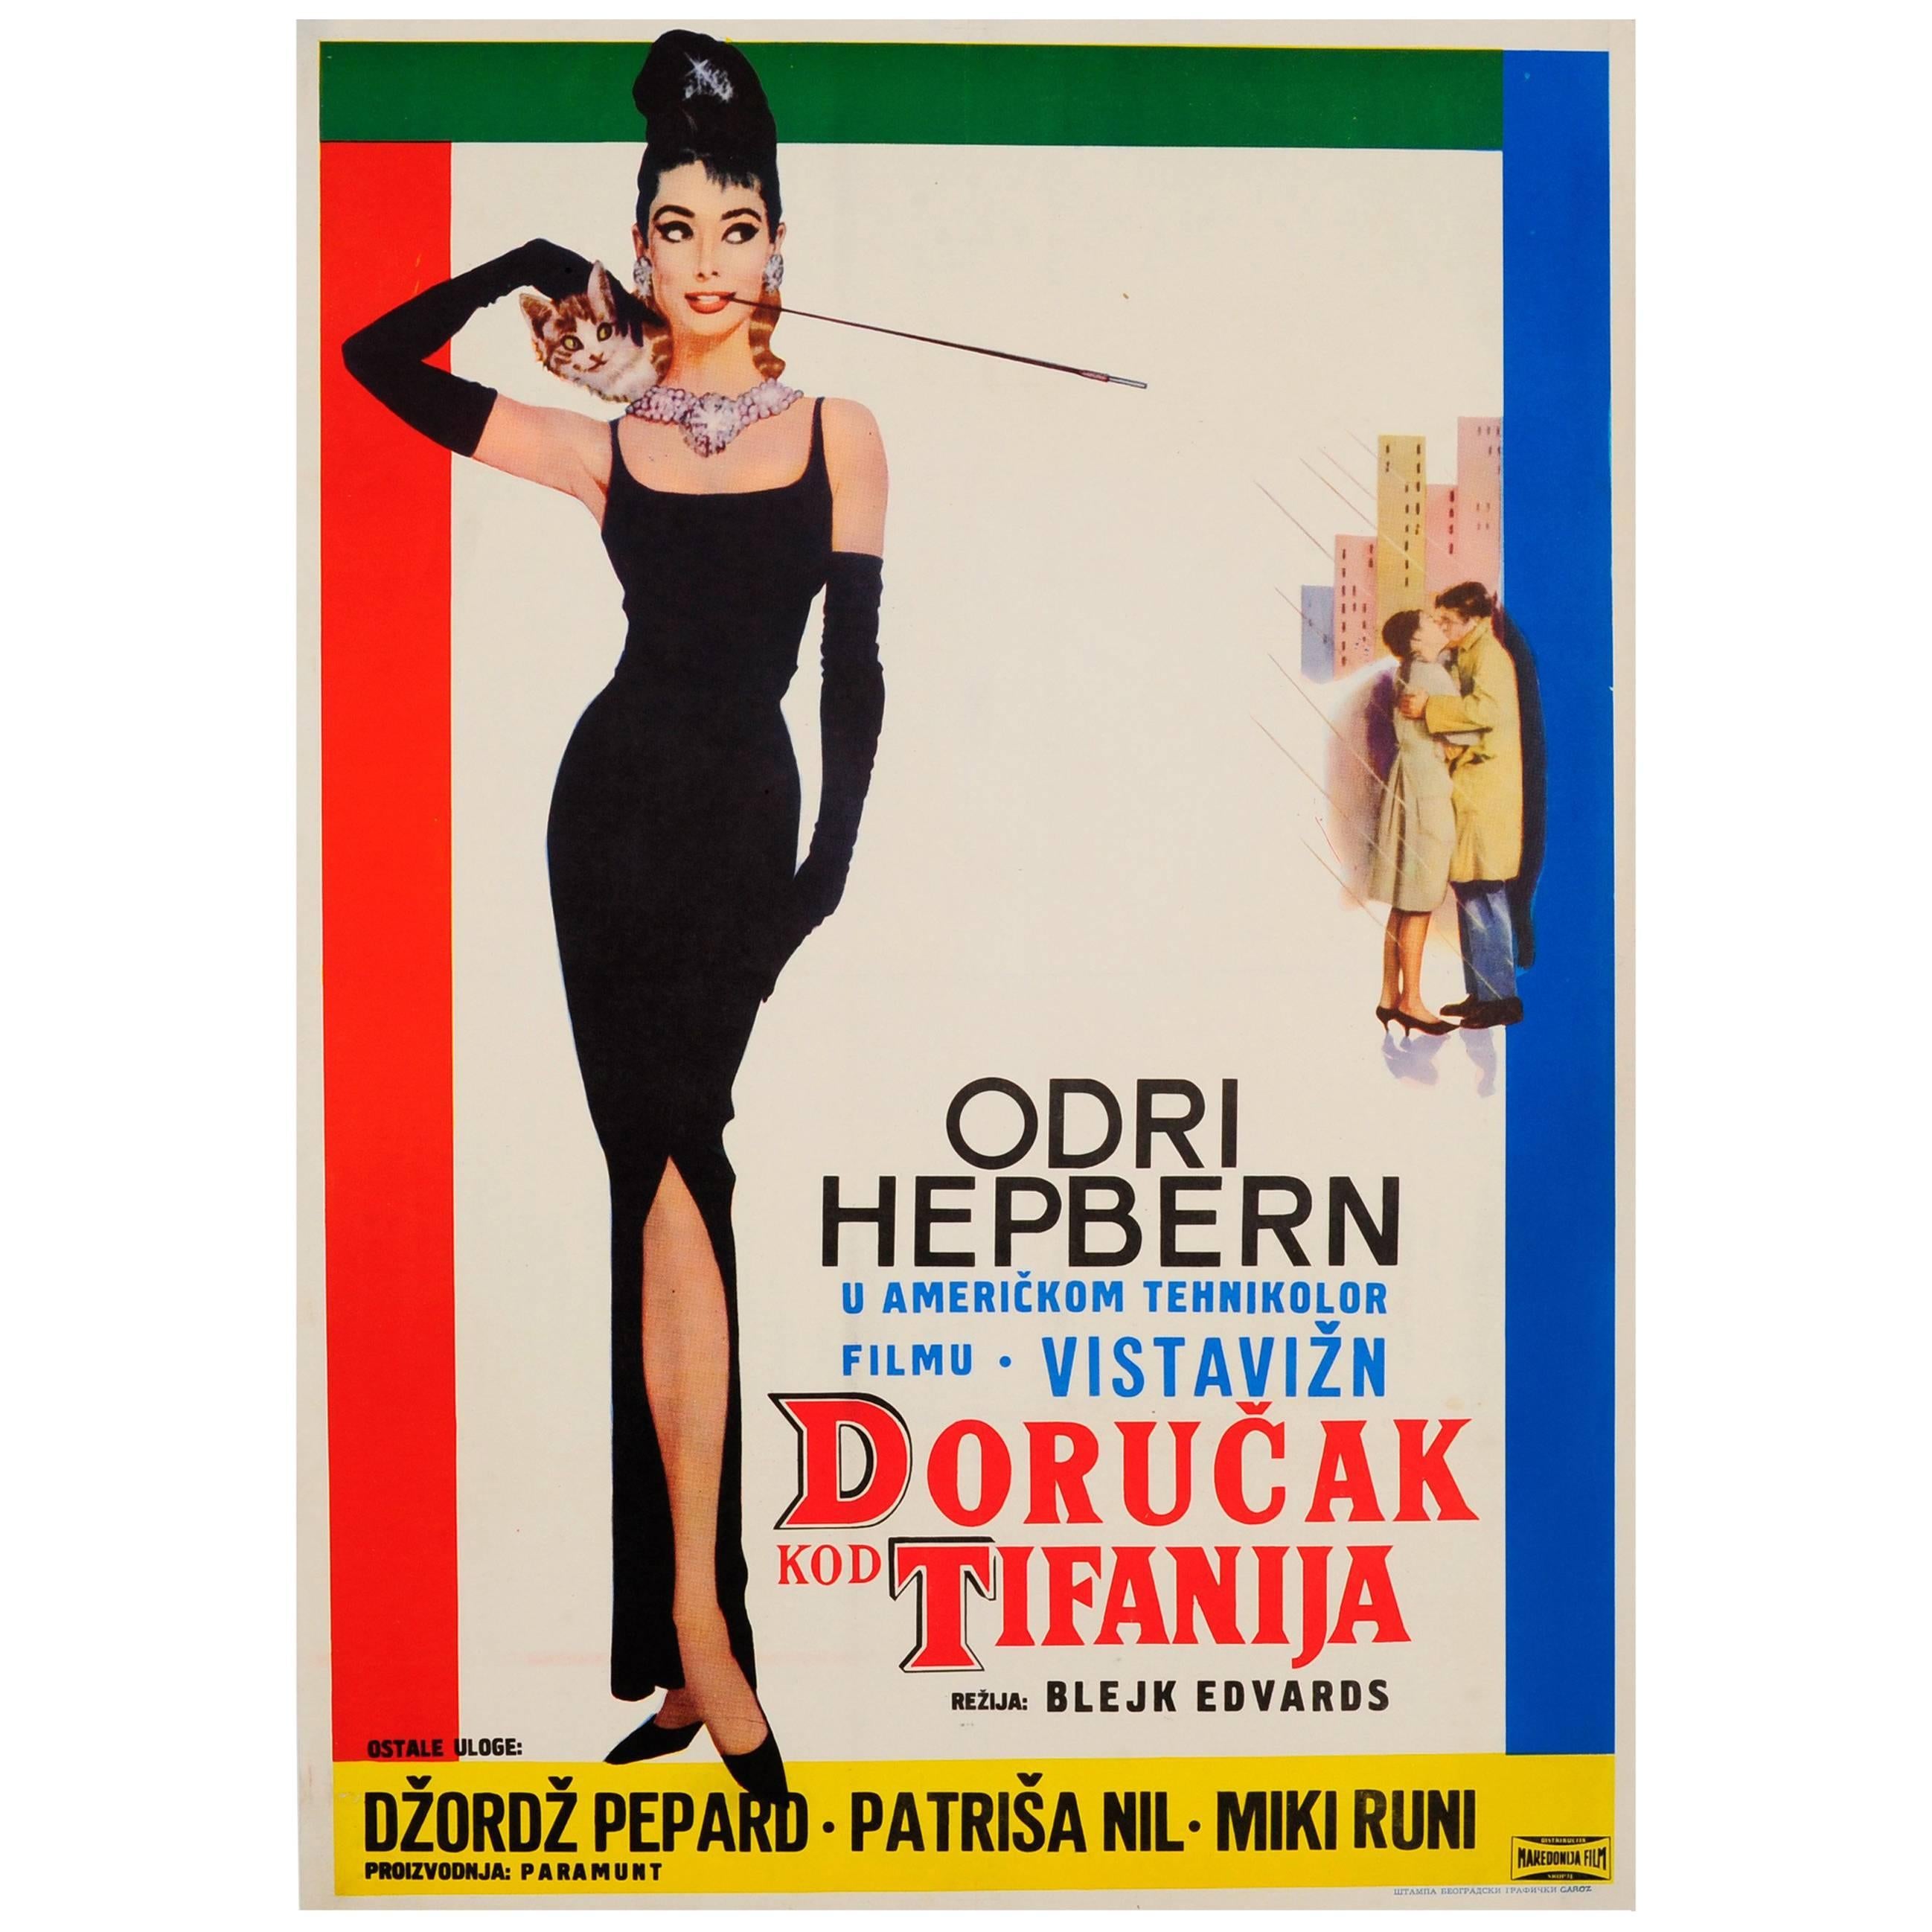 Original Vintage Movie Poster for Breakfast at Tiffany's Starring Audrey Hepburn